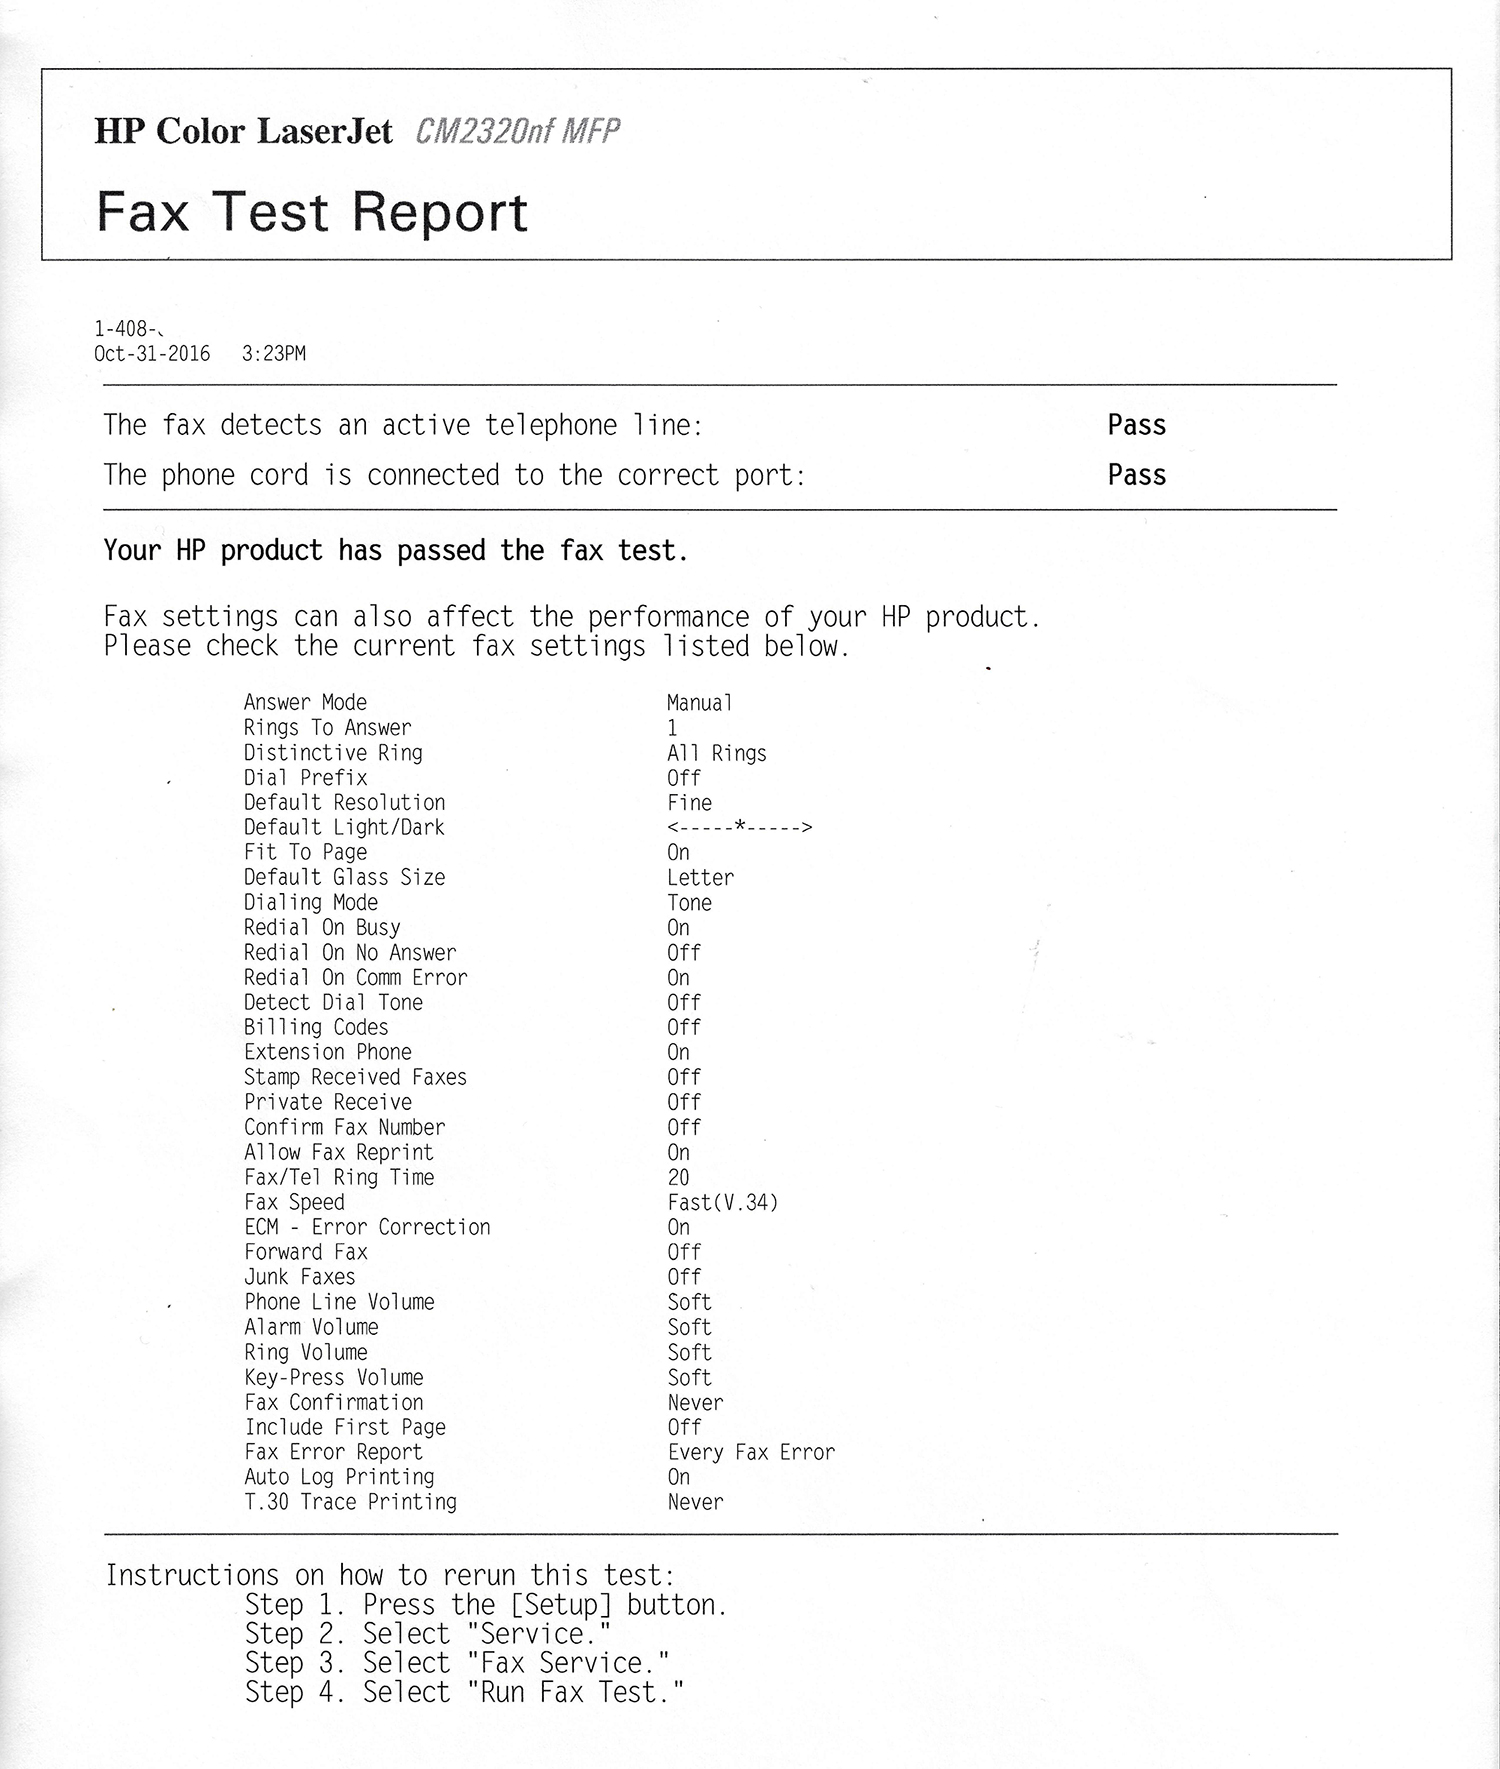 Fax_Test_Results.jpg